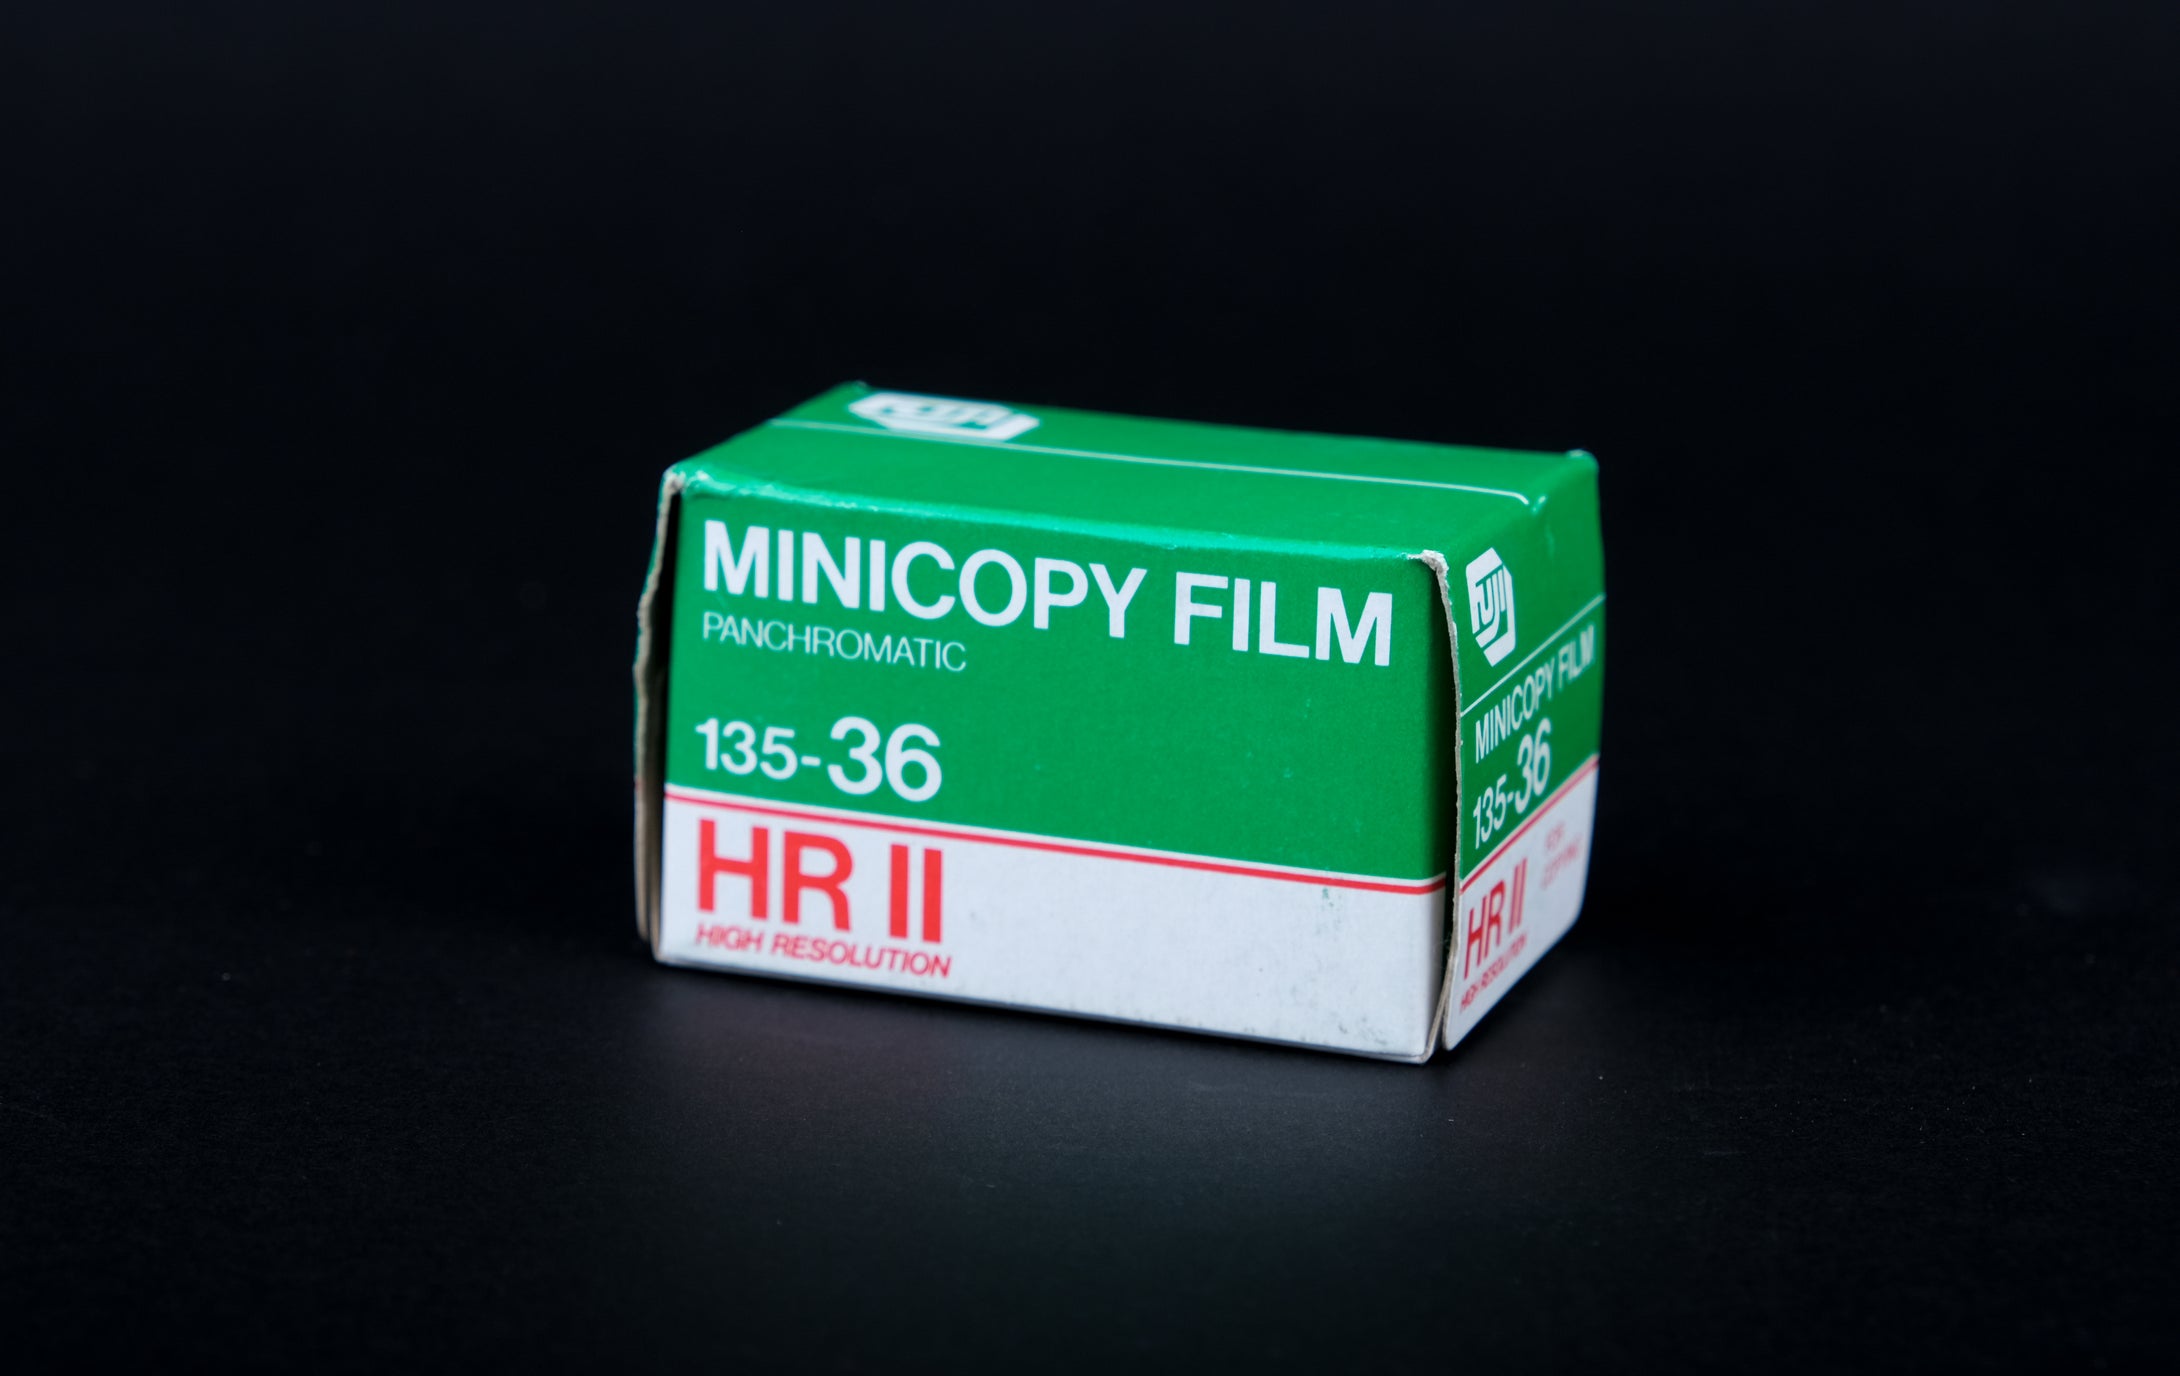 Fujifilm HRII  Minicopy Film Panchromatic 35mm Black and White Expired Film